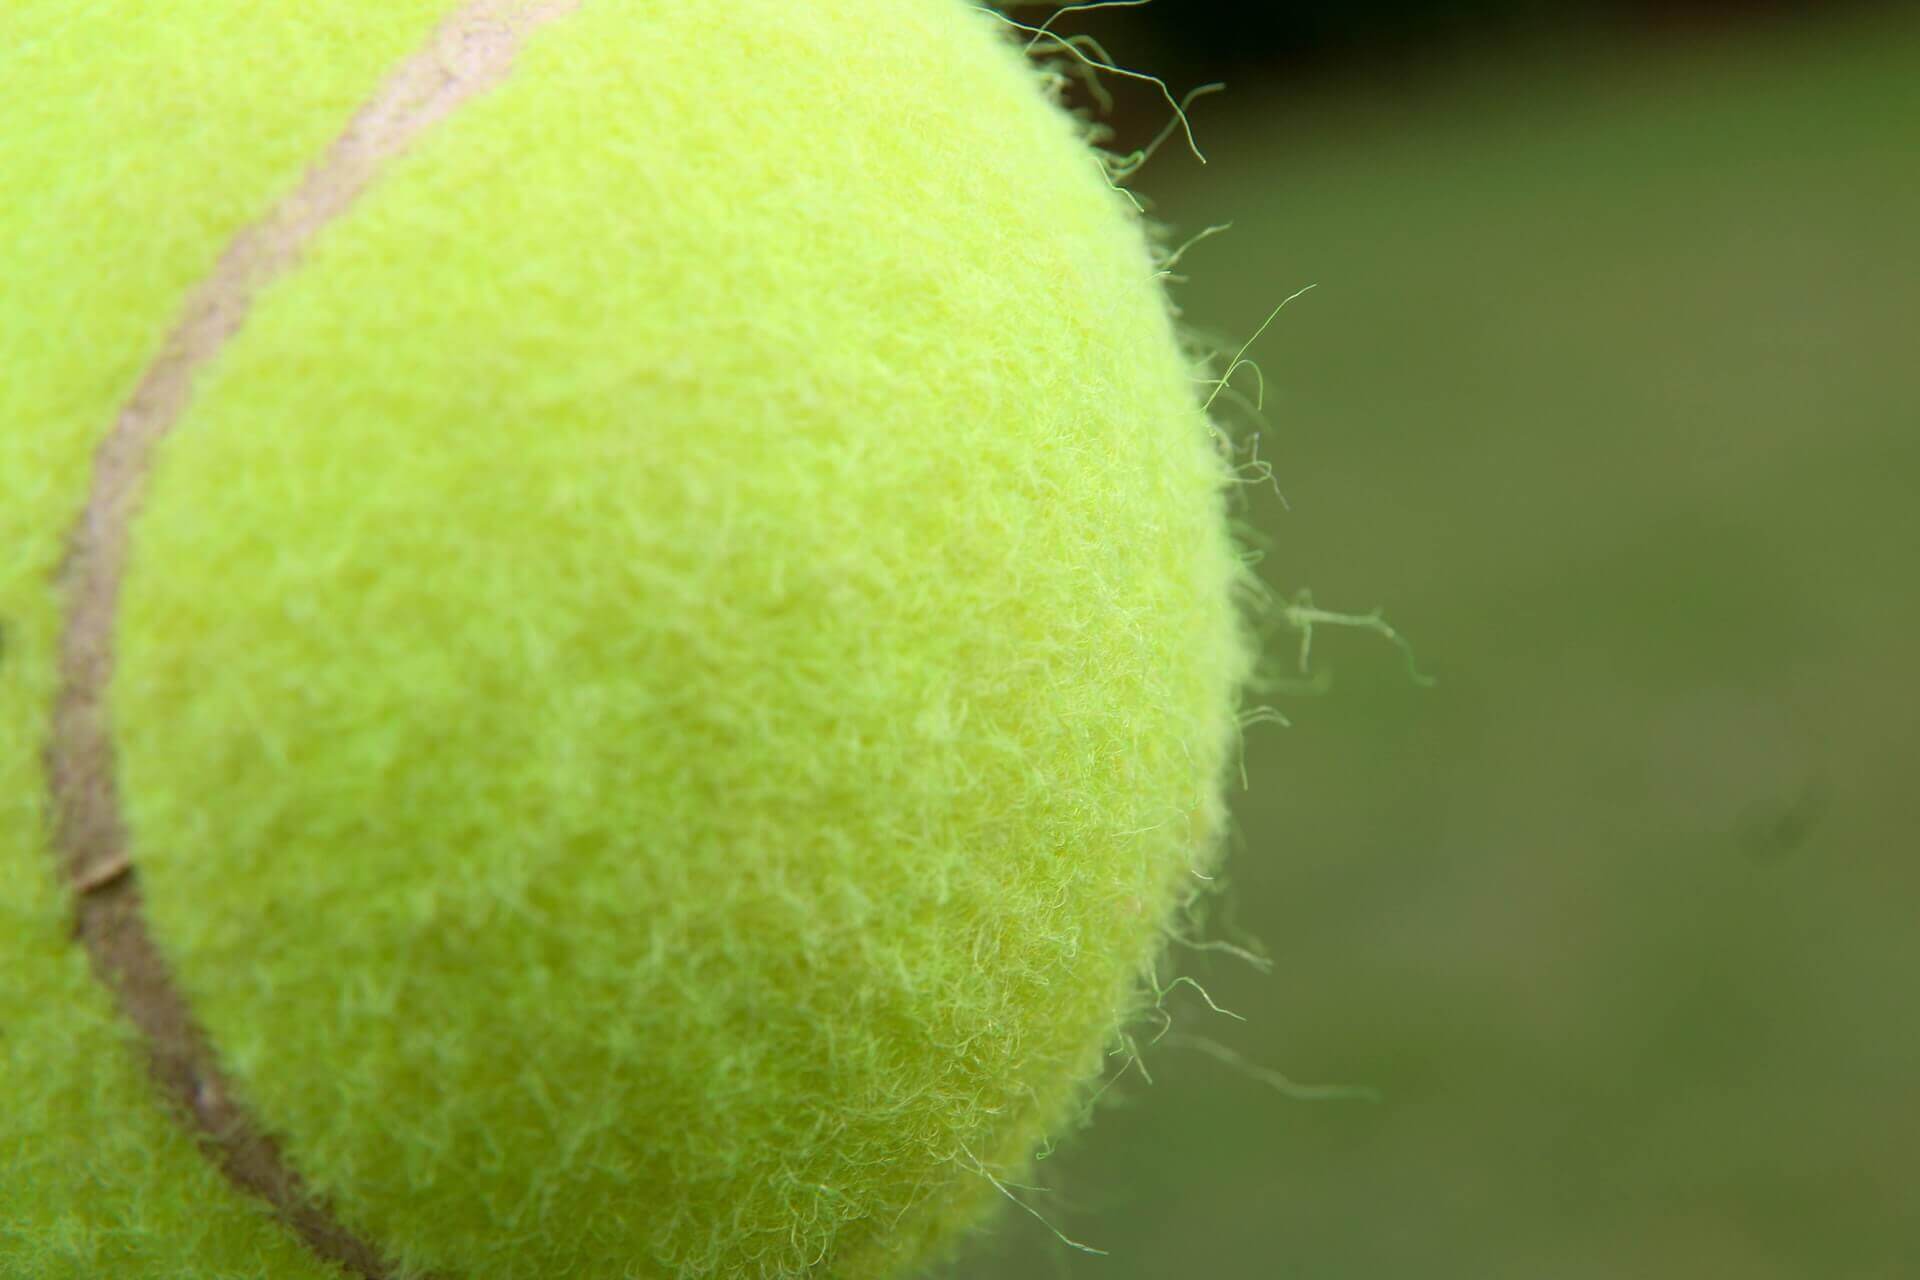 A big tennis ball.